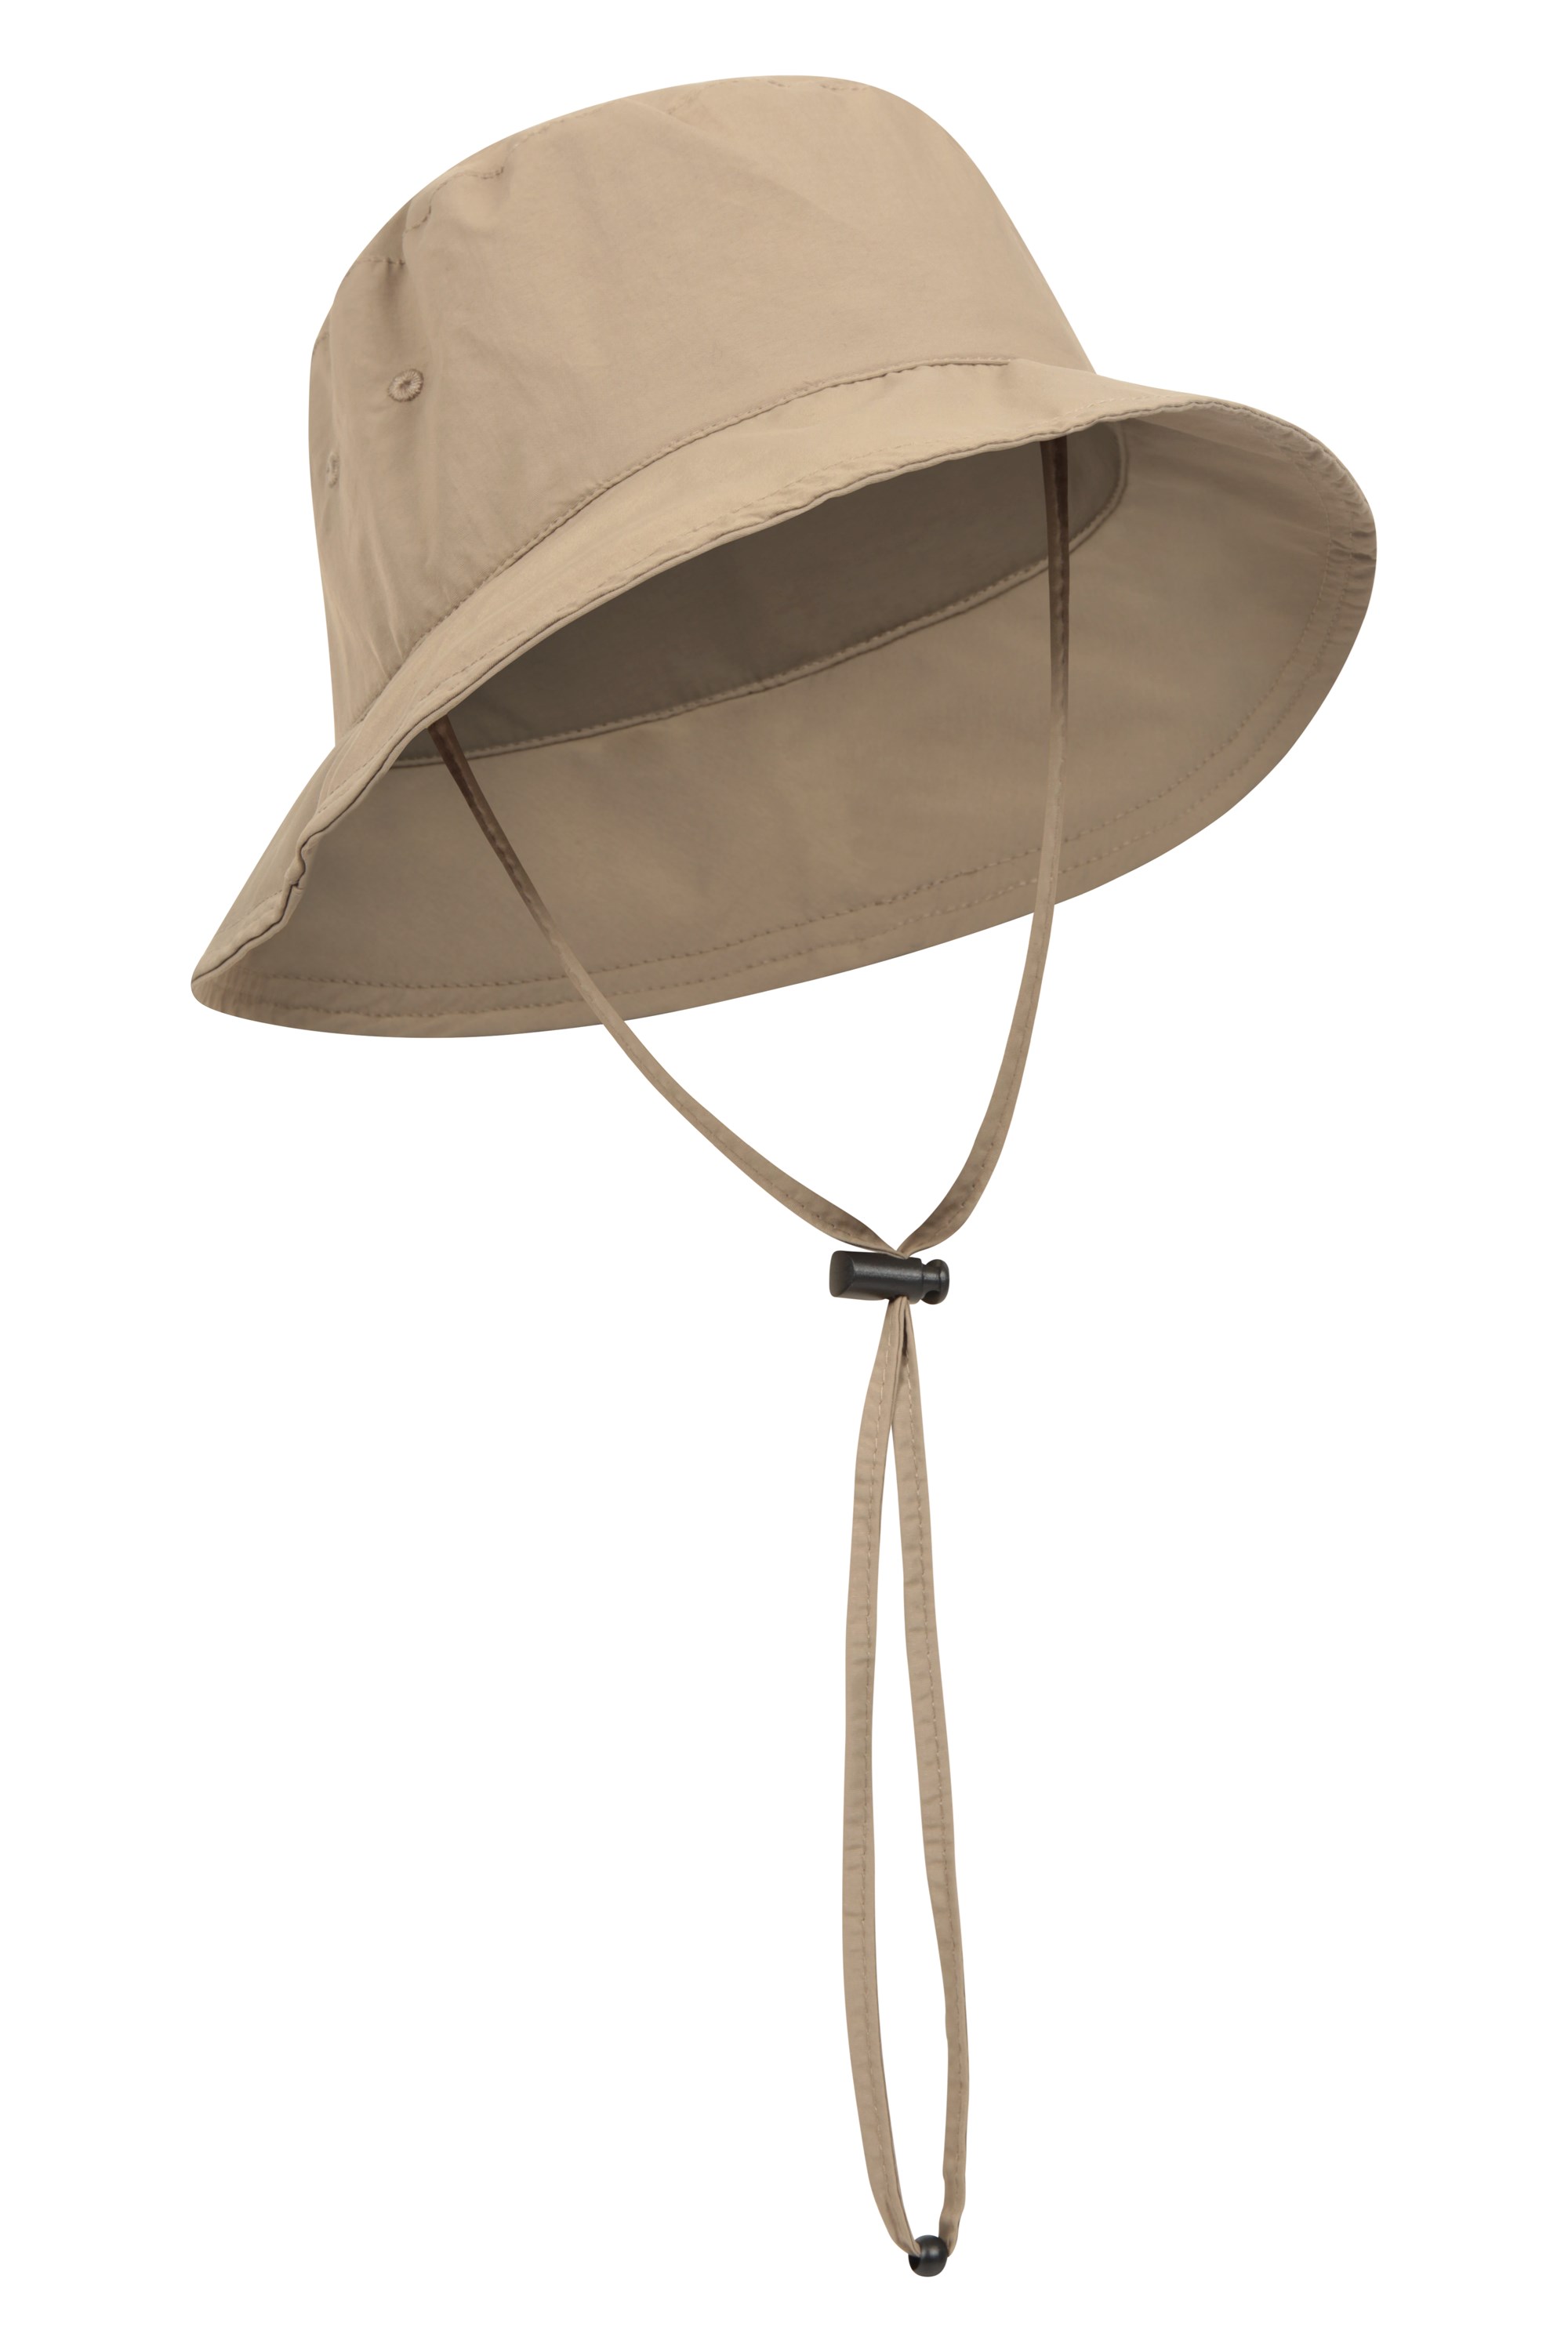 Mountain Warehouse Mens Australian Brim Hat - Beige | Size M